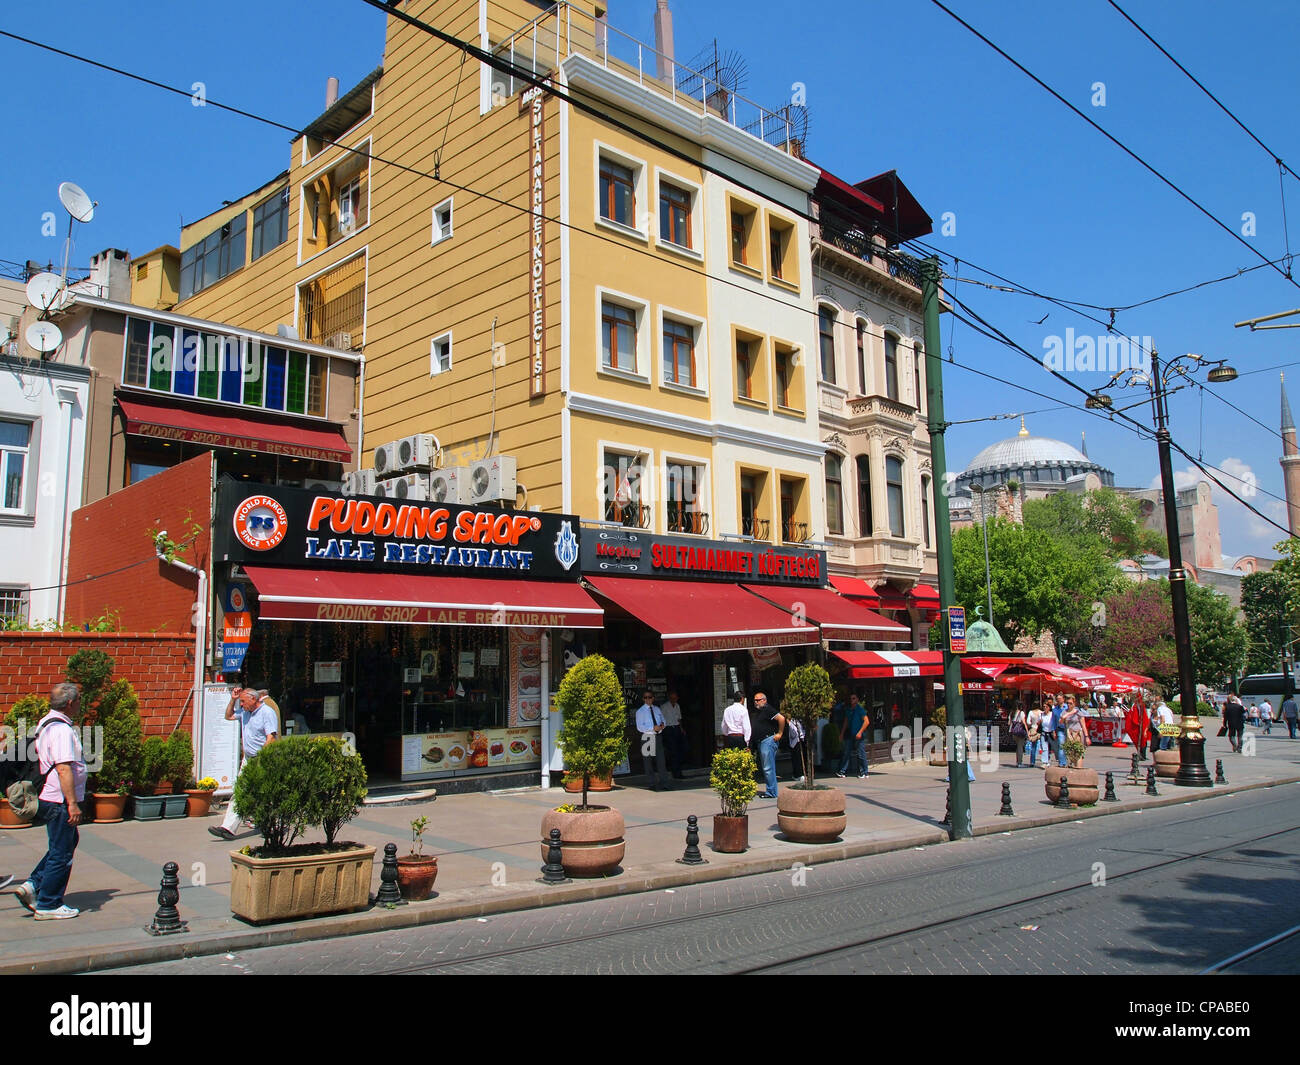 The famous Pudding Shop, Istanbul, Turkey Stock Photo - Alamy